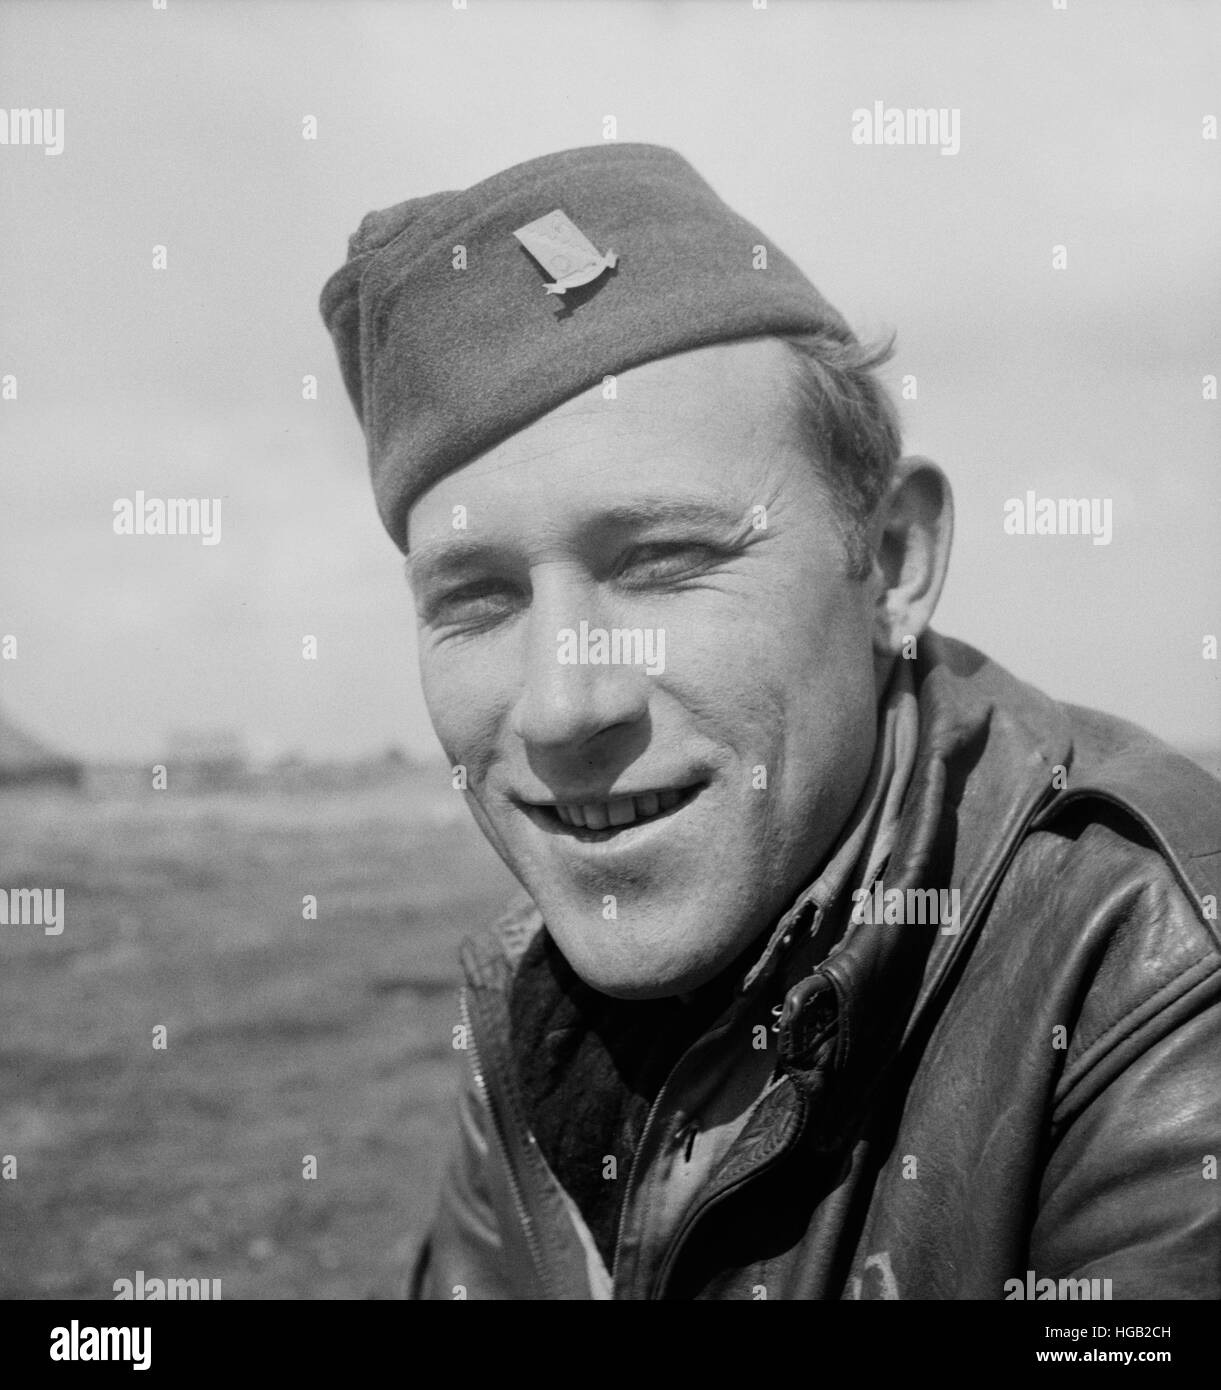 Kermit M. Gregory, radio operator of a B-24 bomber during World War II. Stock Photo